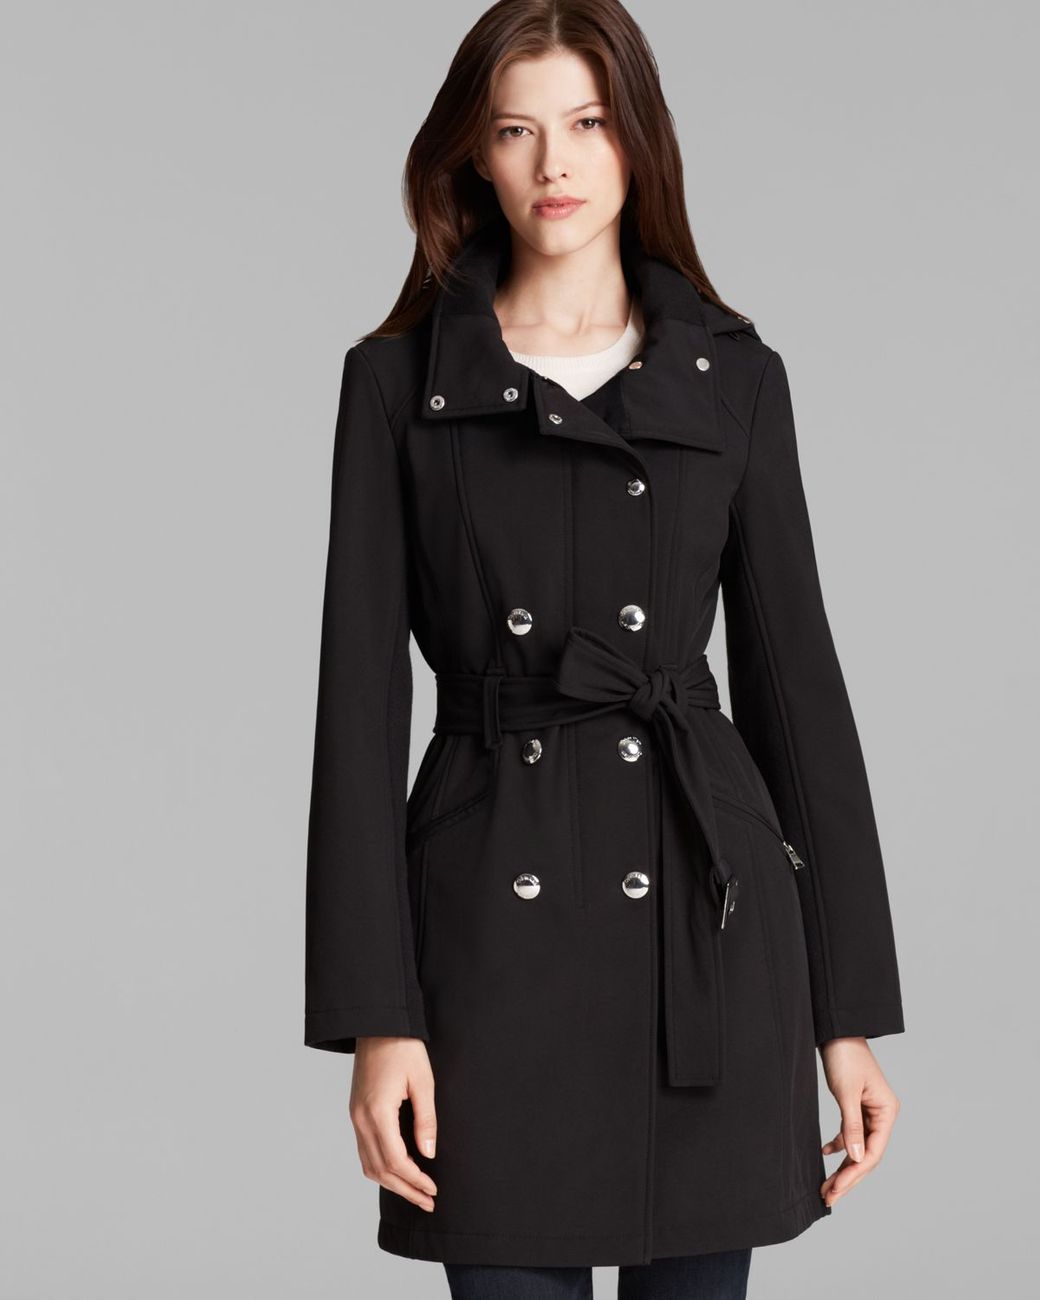 Onbevredigend Tenen Moskee Calvin Klein Trench Coat - Soft Shell in Black | Lyst